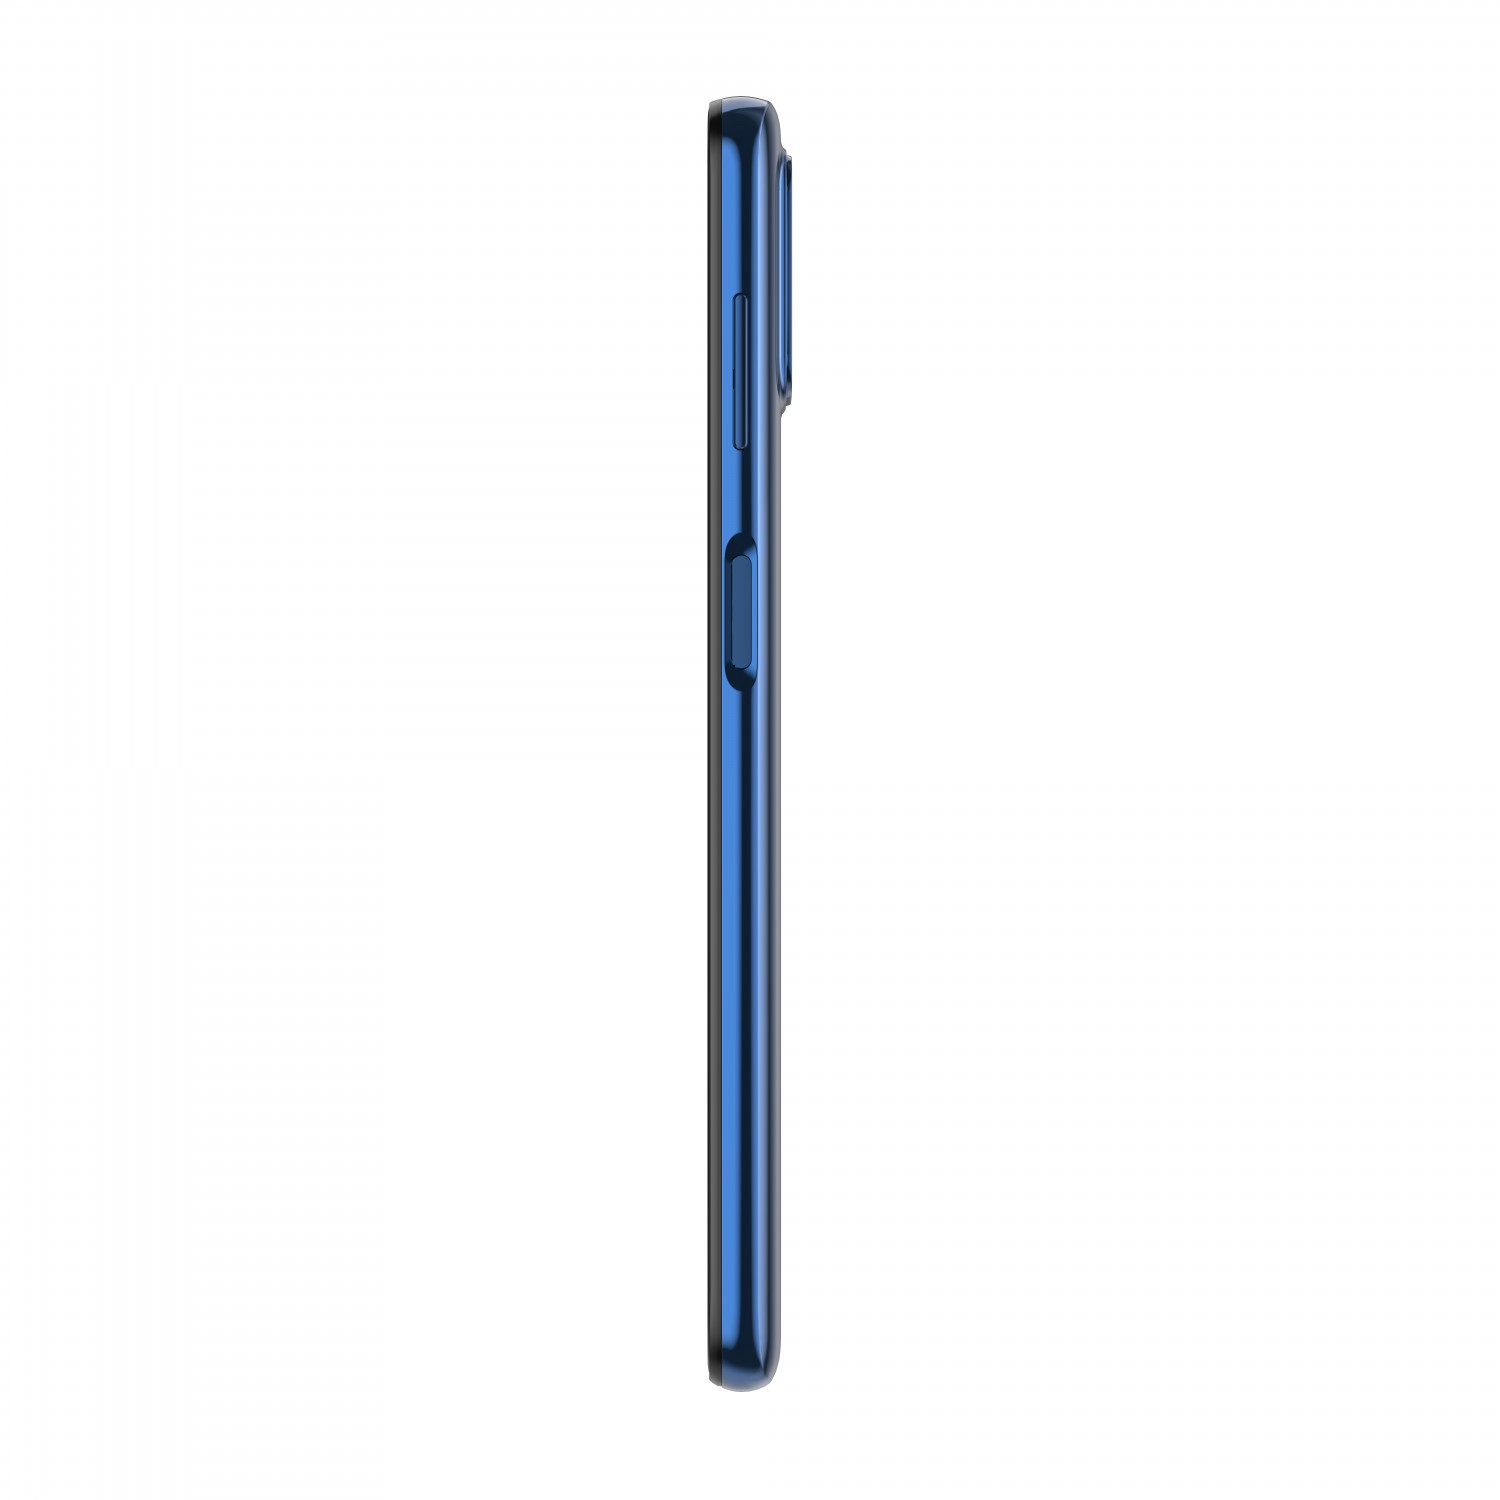 Motorola Moto G9 Plus 6GB/1286GB modrá